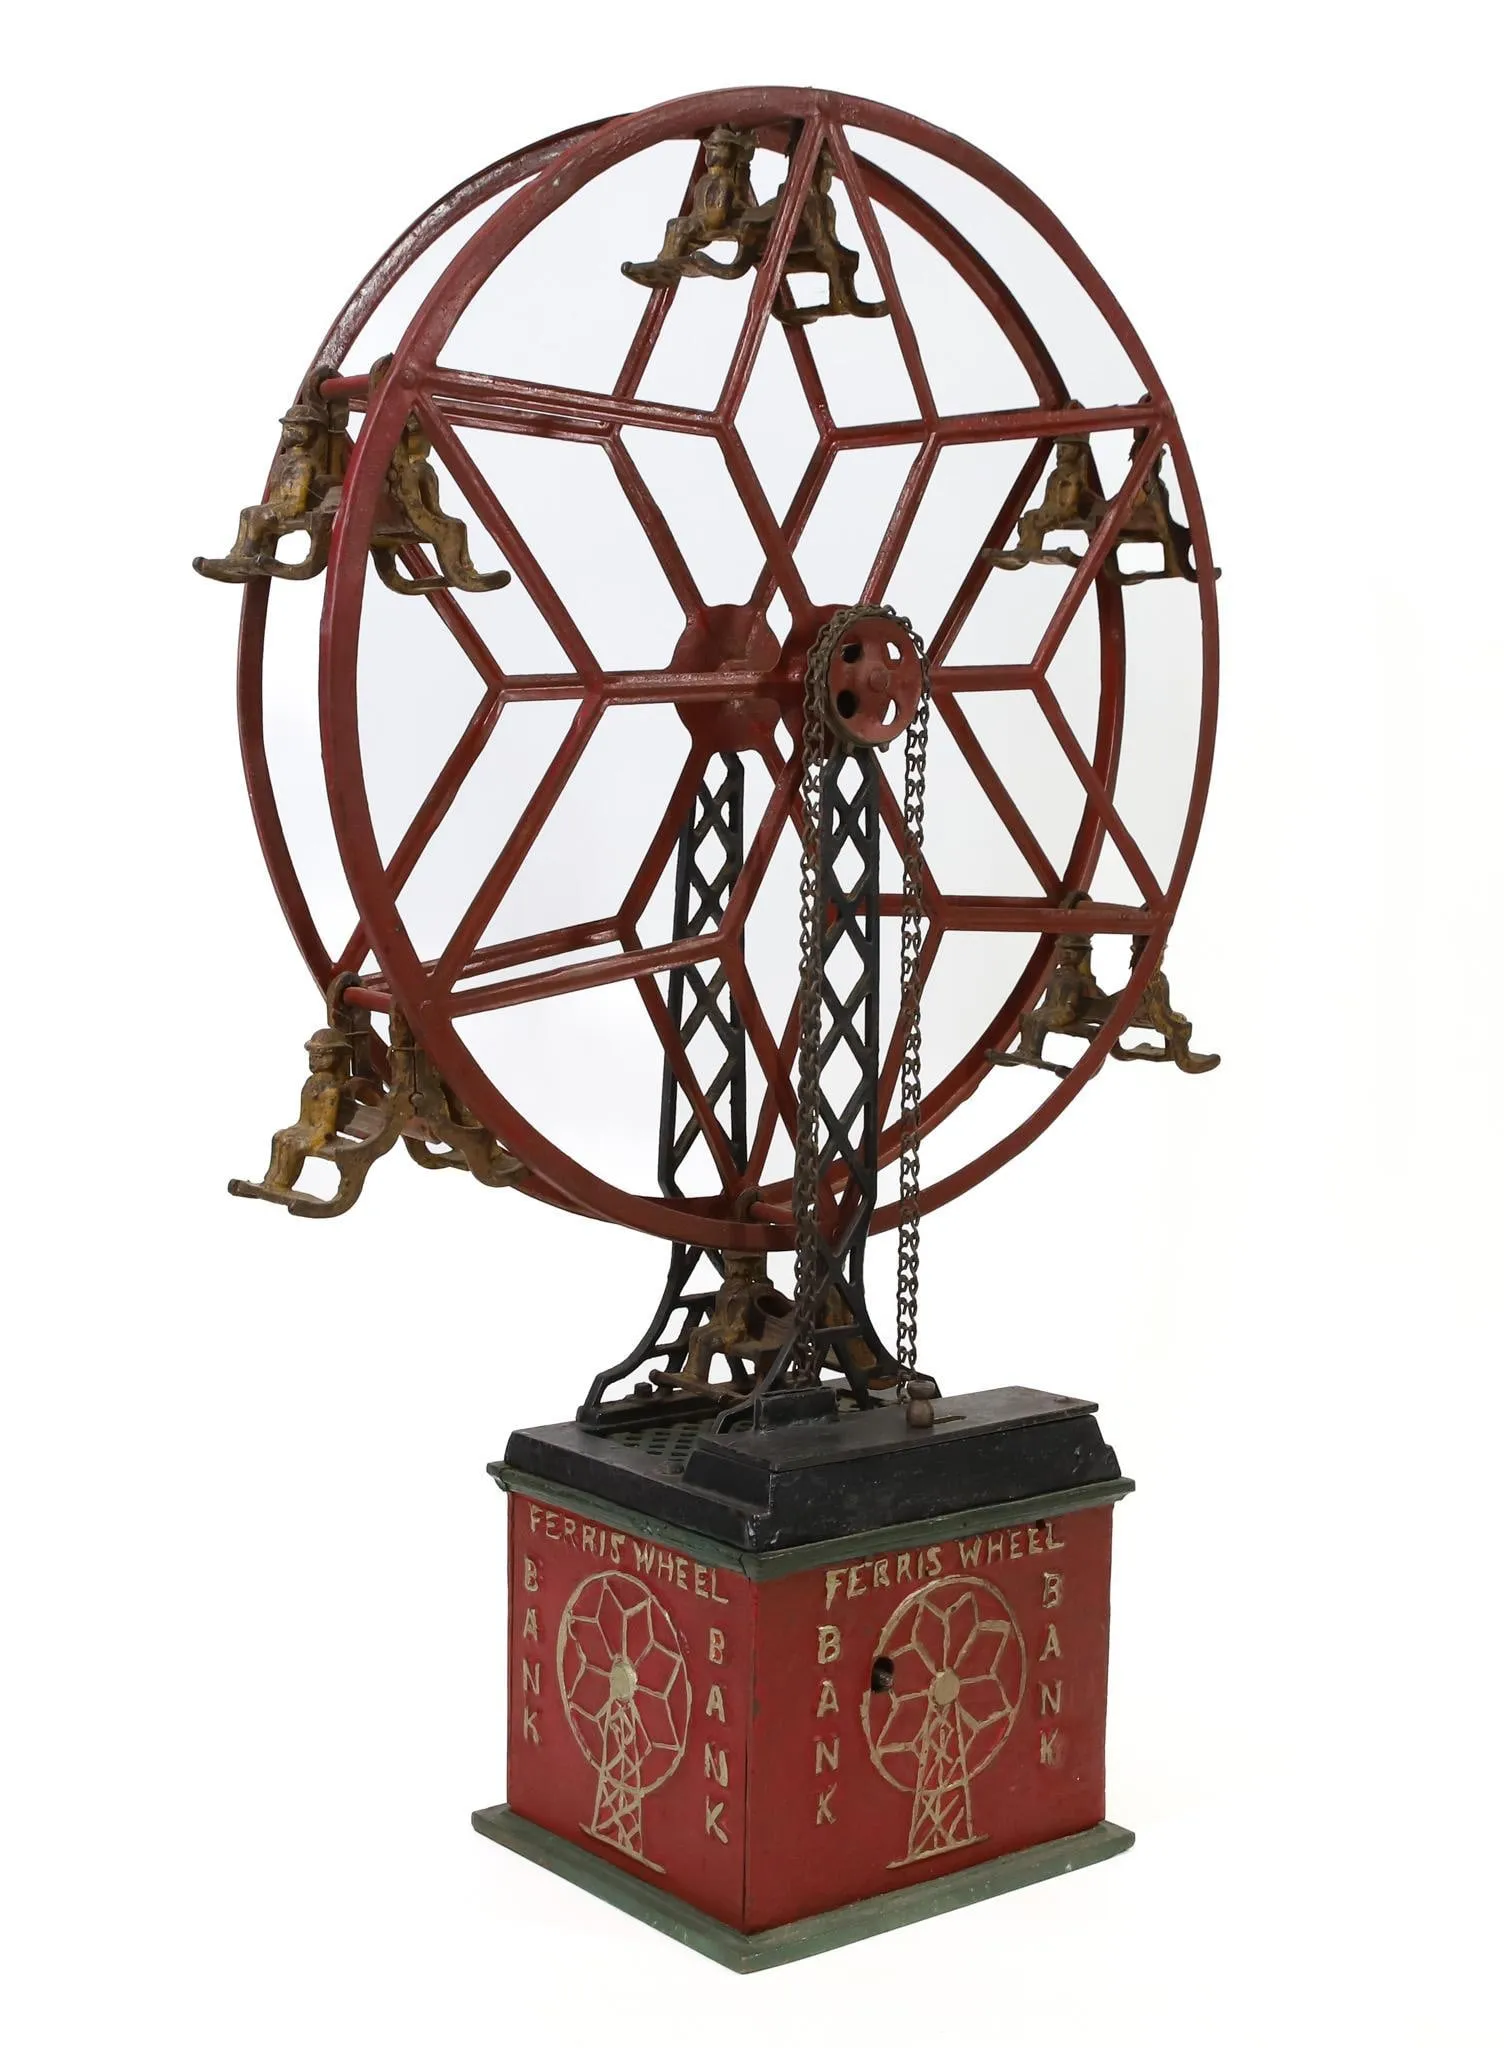 Hubley Ferris Wheel mechanical bank, estimated at $4,000-$6,000 at Alderfer Auctions.